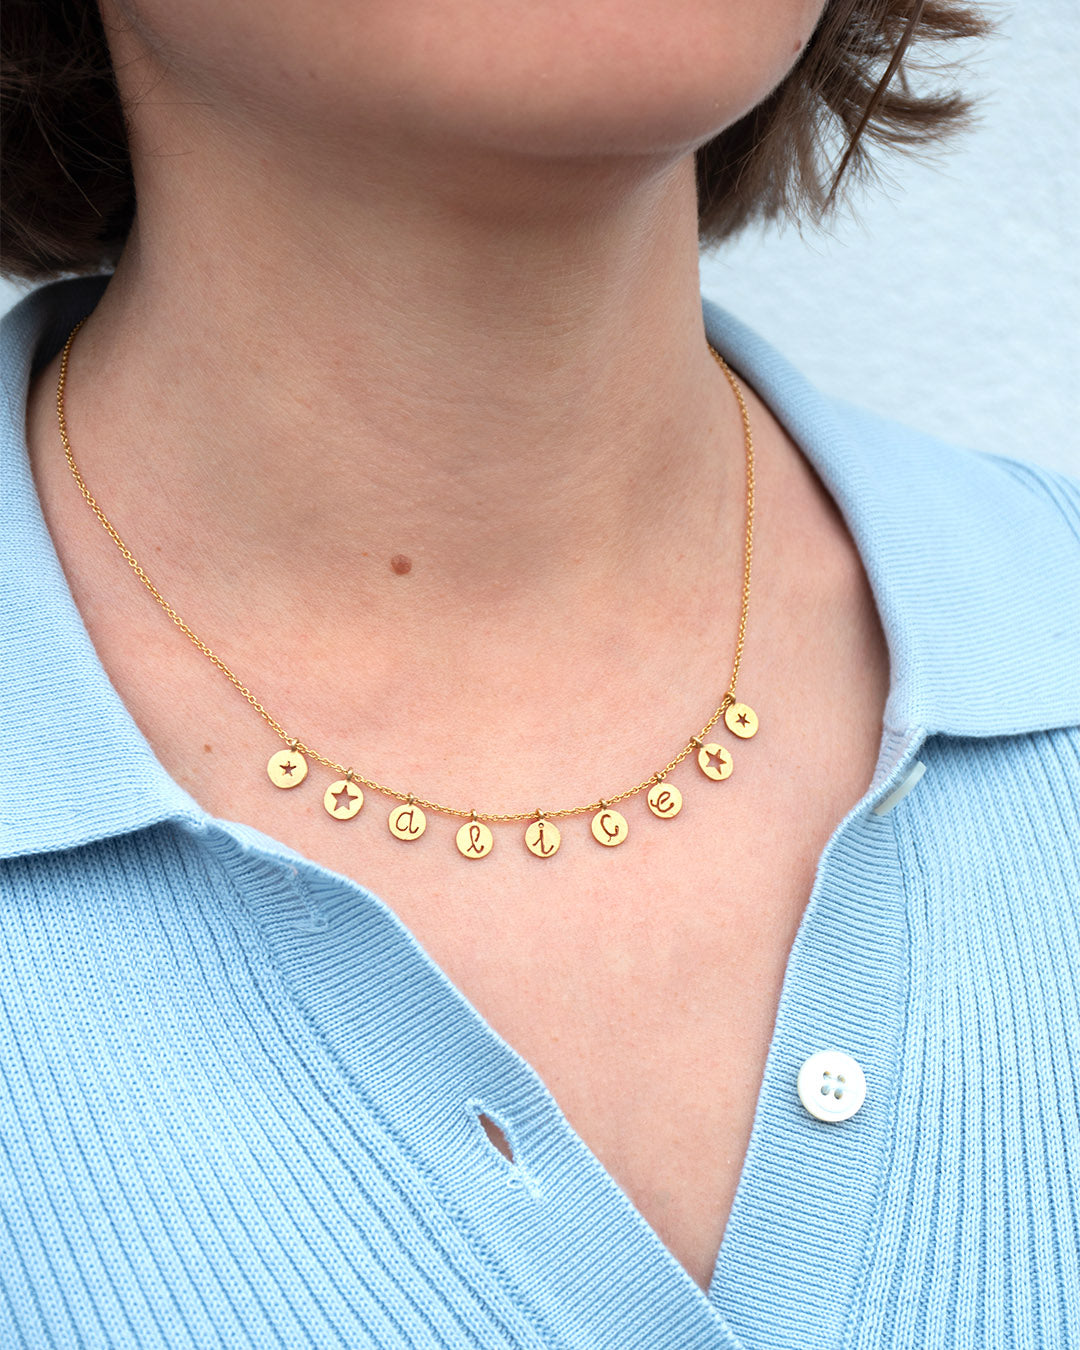 Custom handmade gold necklace - Giulia Tamburini personalize